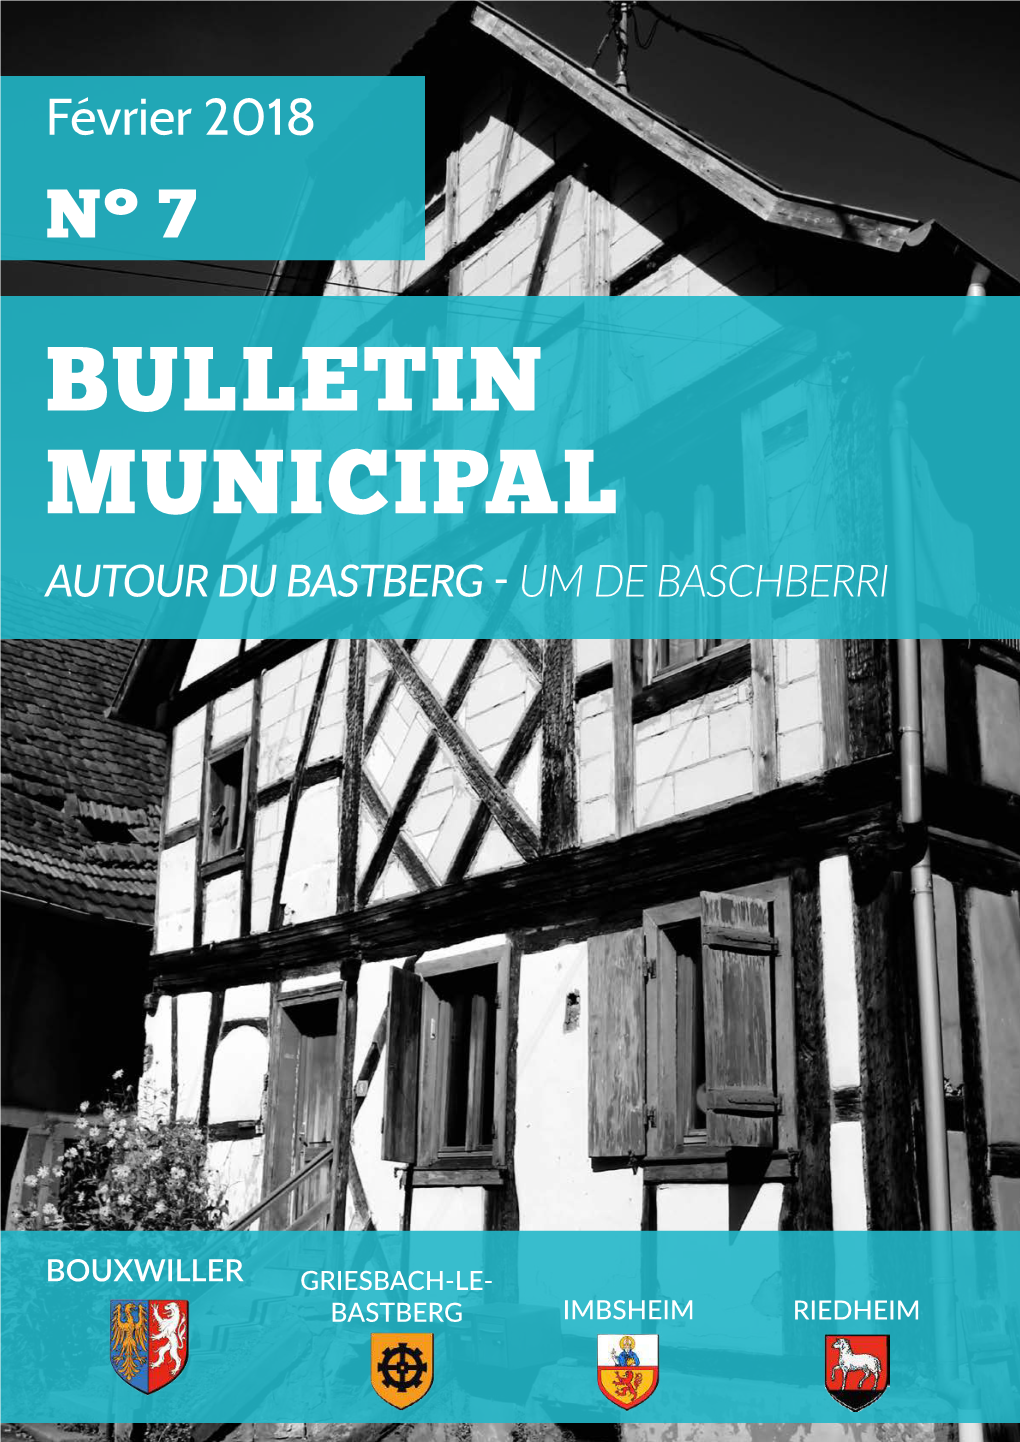 Bulletin Municipal Autour Du Bastberg - Um De Baschberri